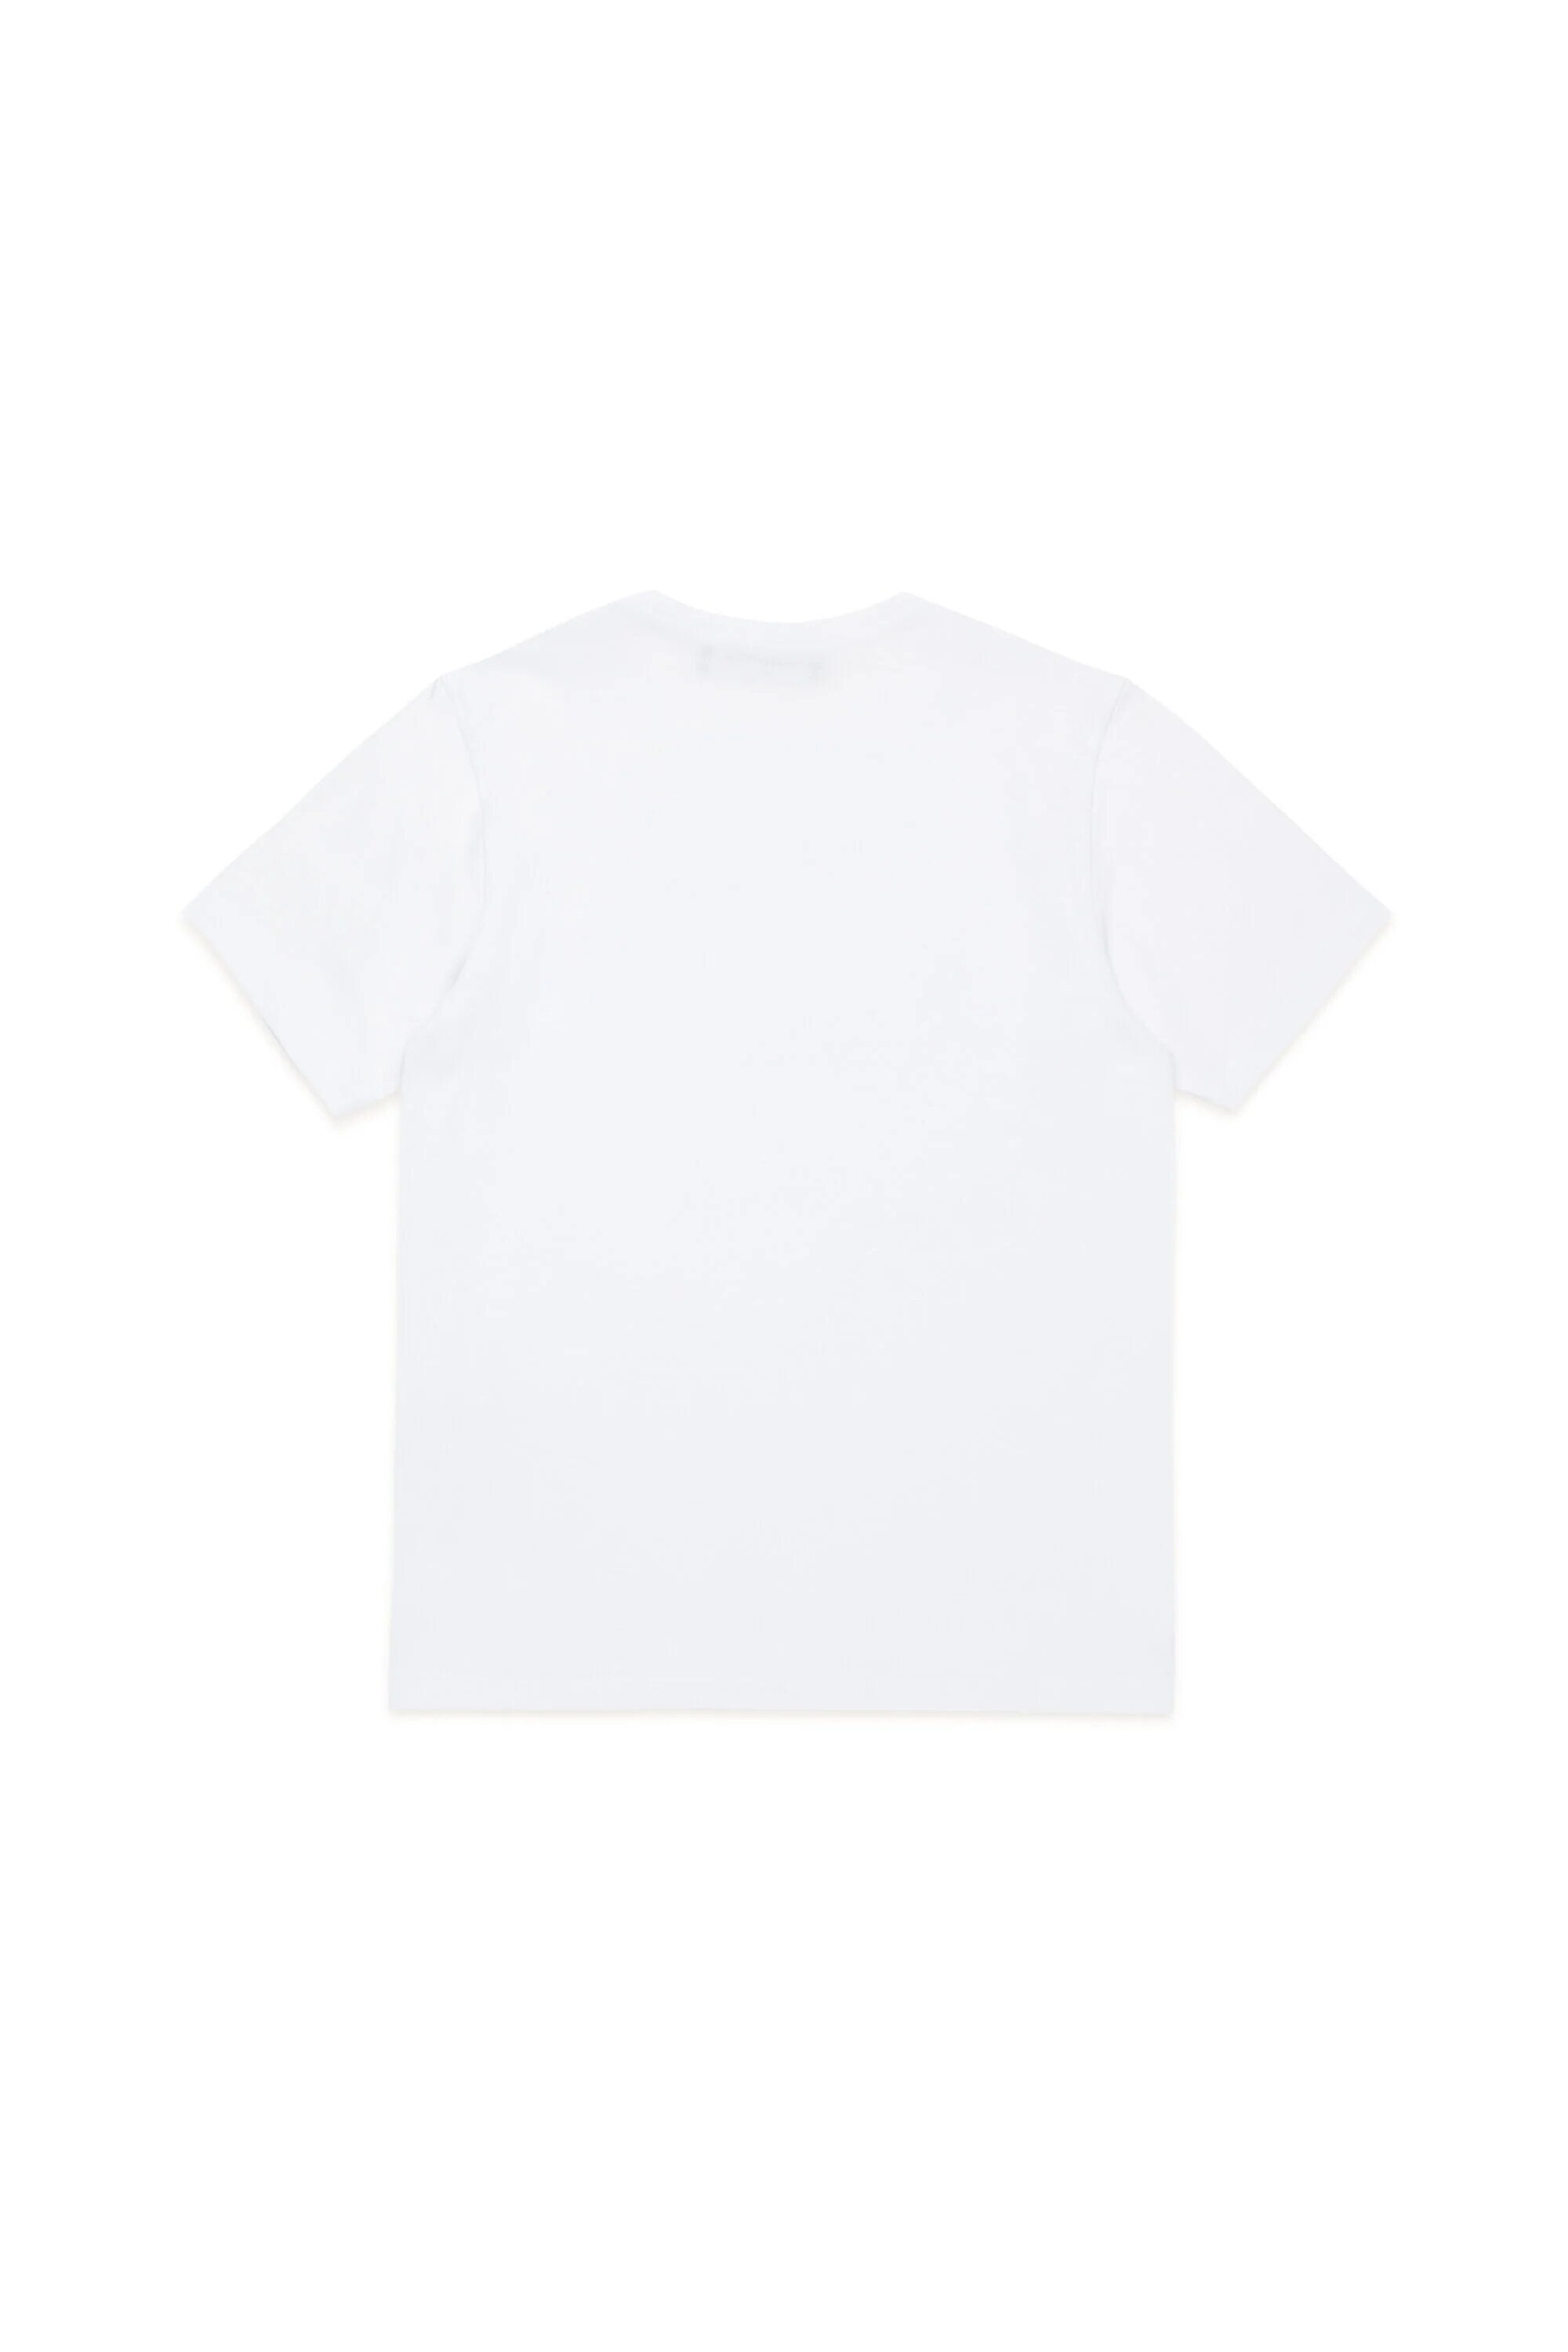 DSQUARED2-T-Shirt Unisex Bambino Relax Logo-Bianco